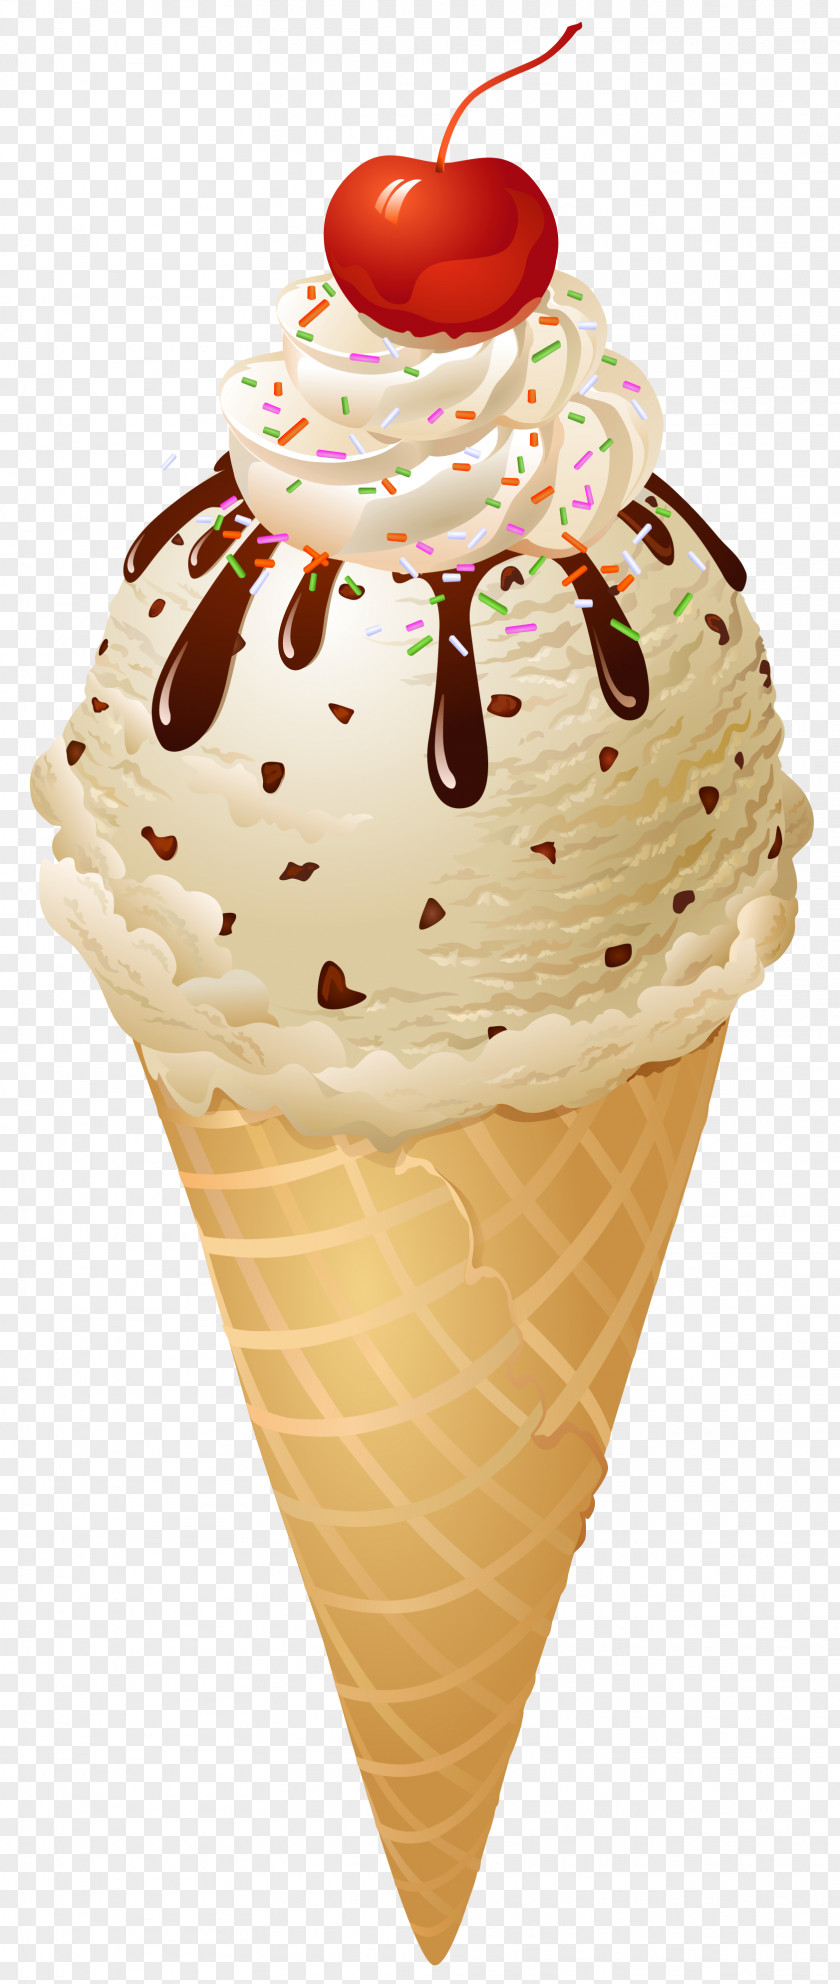 Ice Cream Image Cone Chocolate PNG